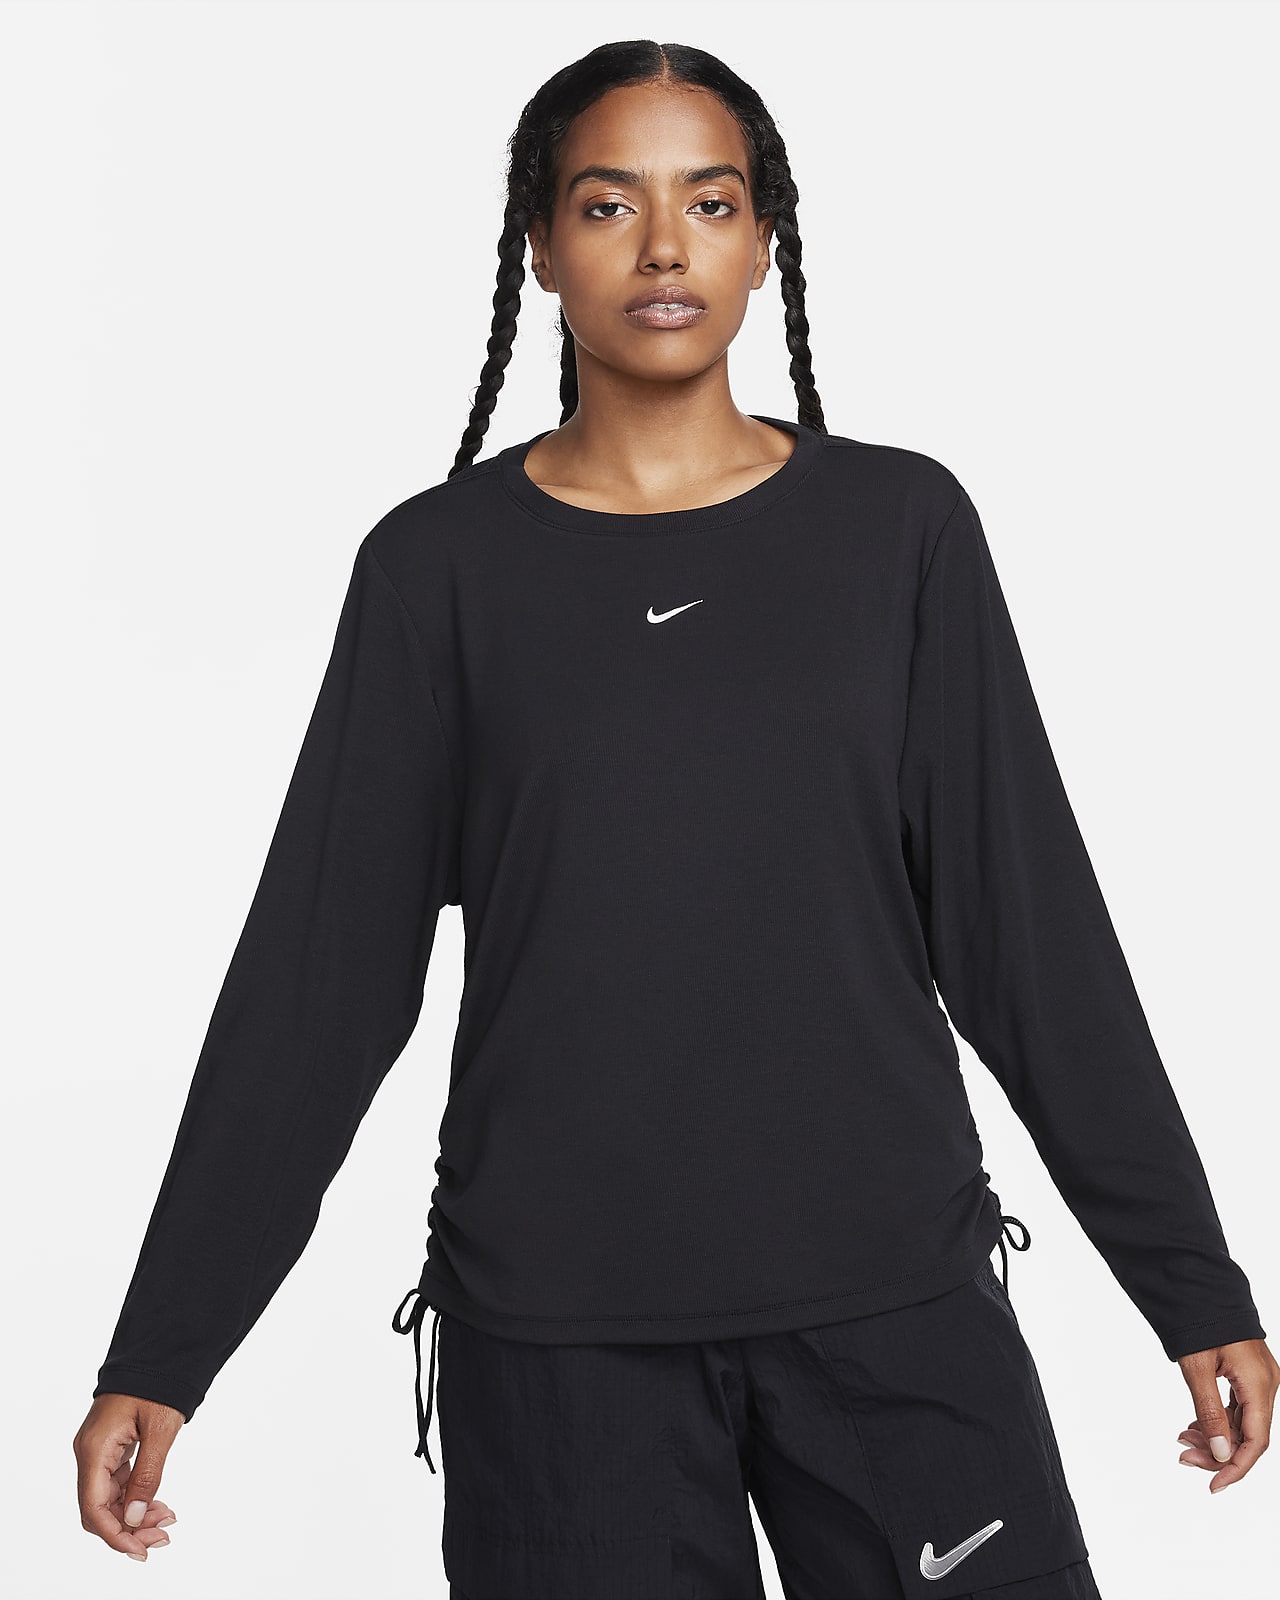 Nike Sportswear Essential geripptes Mod-Crop-Longsleeve für Damen (große Größen)